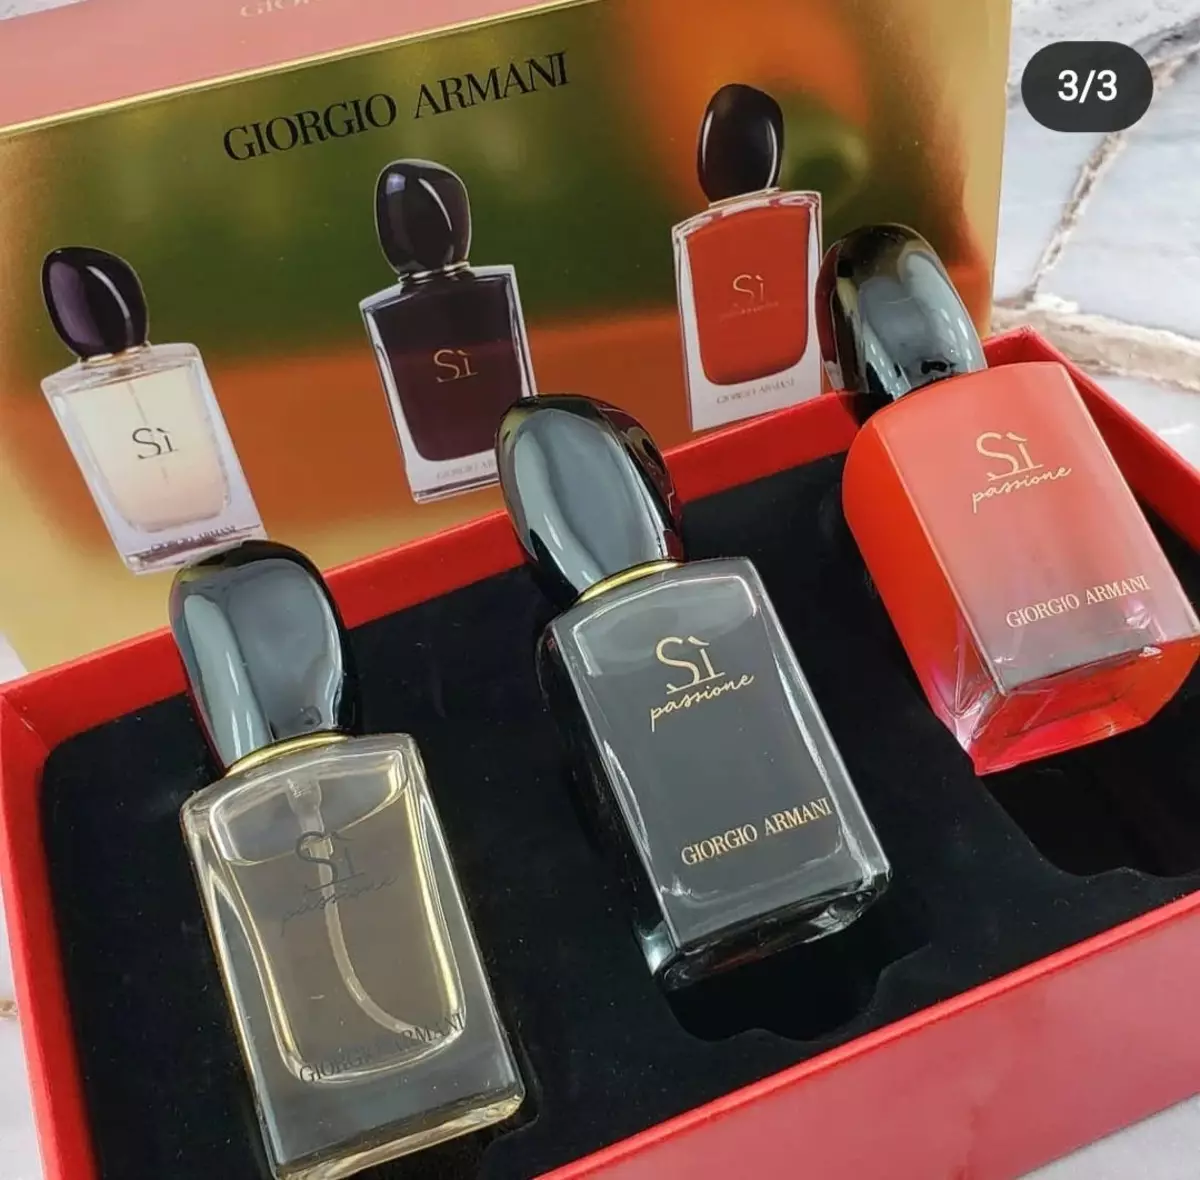 Miniatur minyak wangi: set minyak wangi lan minyak wangi, pilih botol cilik roh asli 23432_6